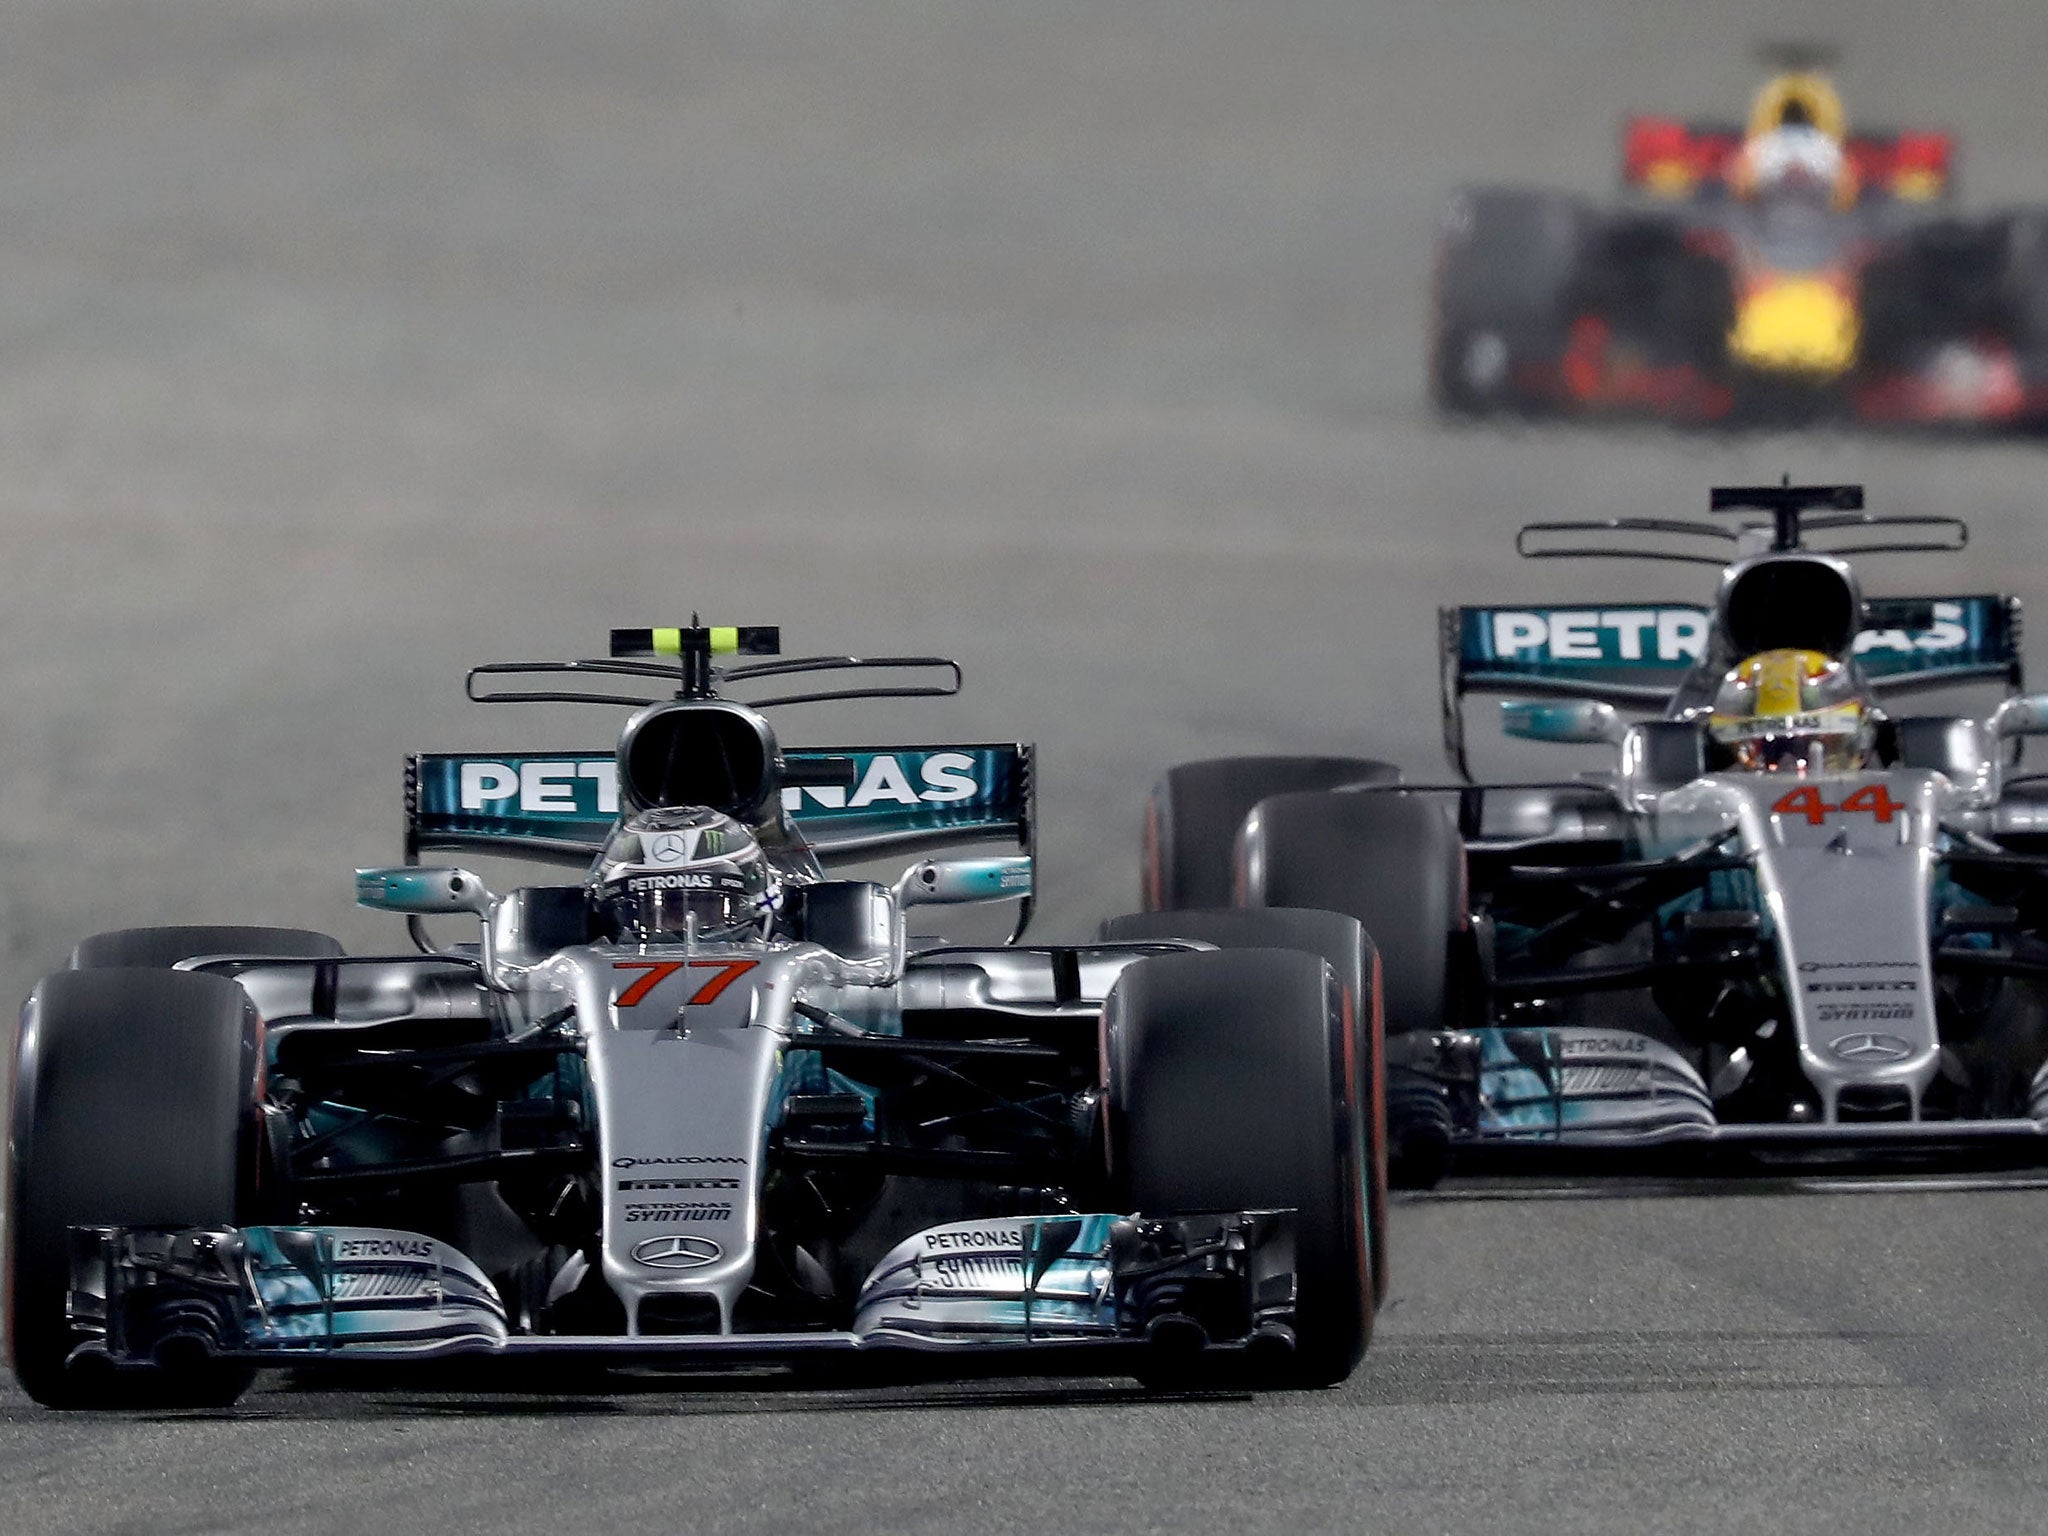 Valtteri Bottas had to let Lewis Hamilton through during the Bahrain Grand Prix